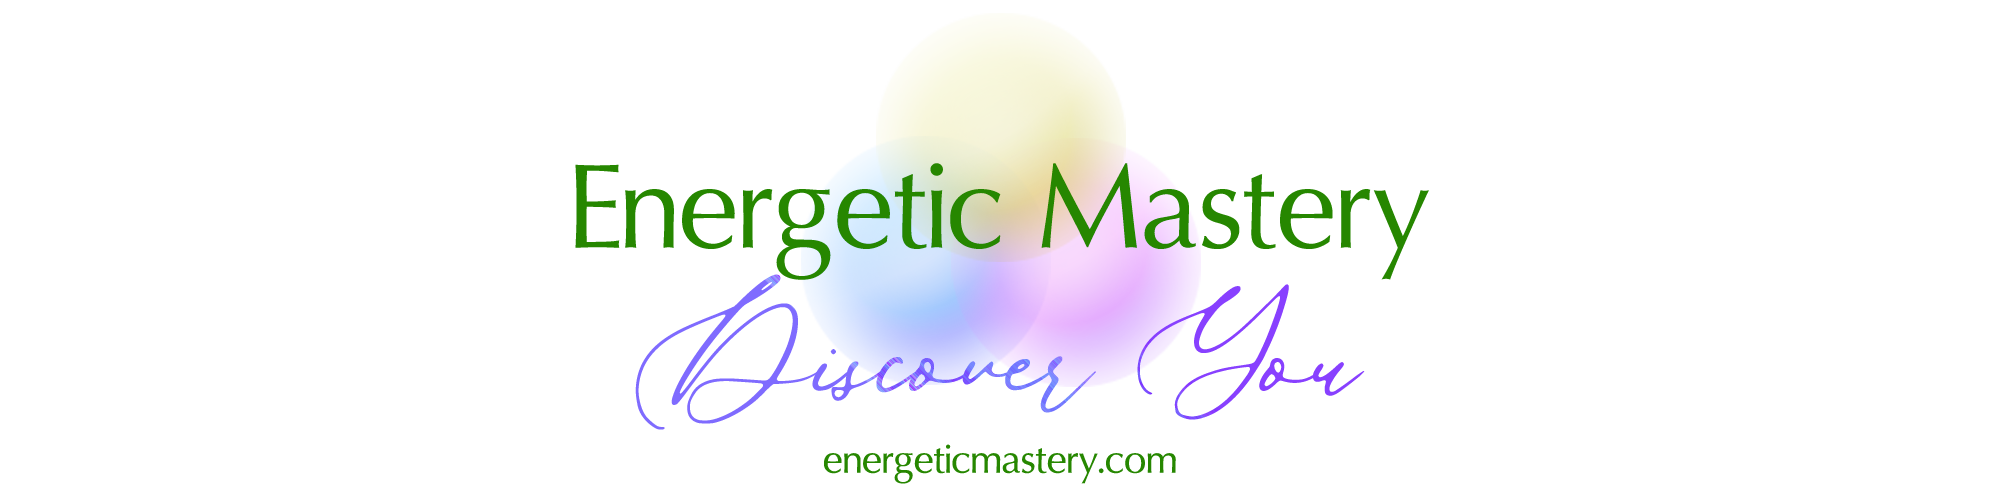 Energetic Mastery